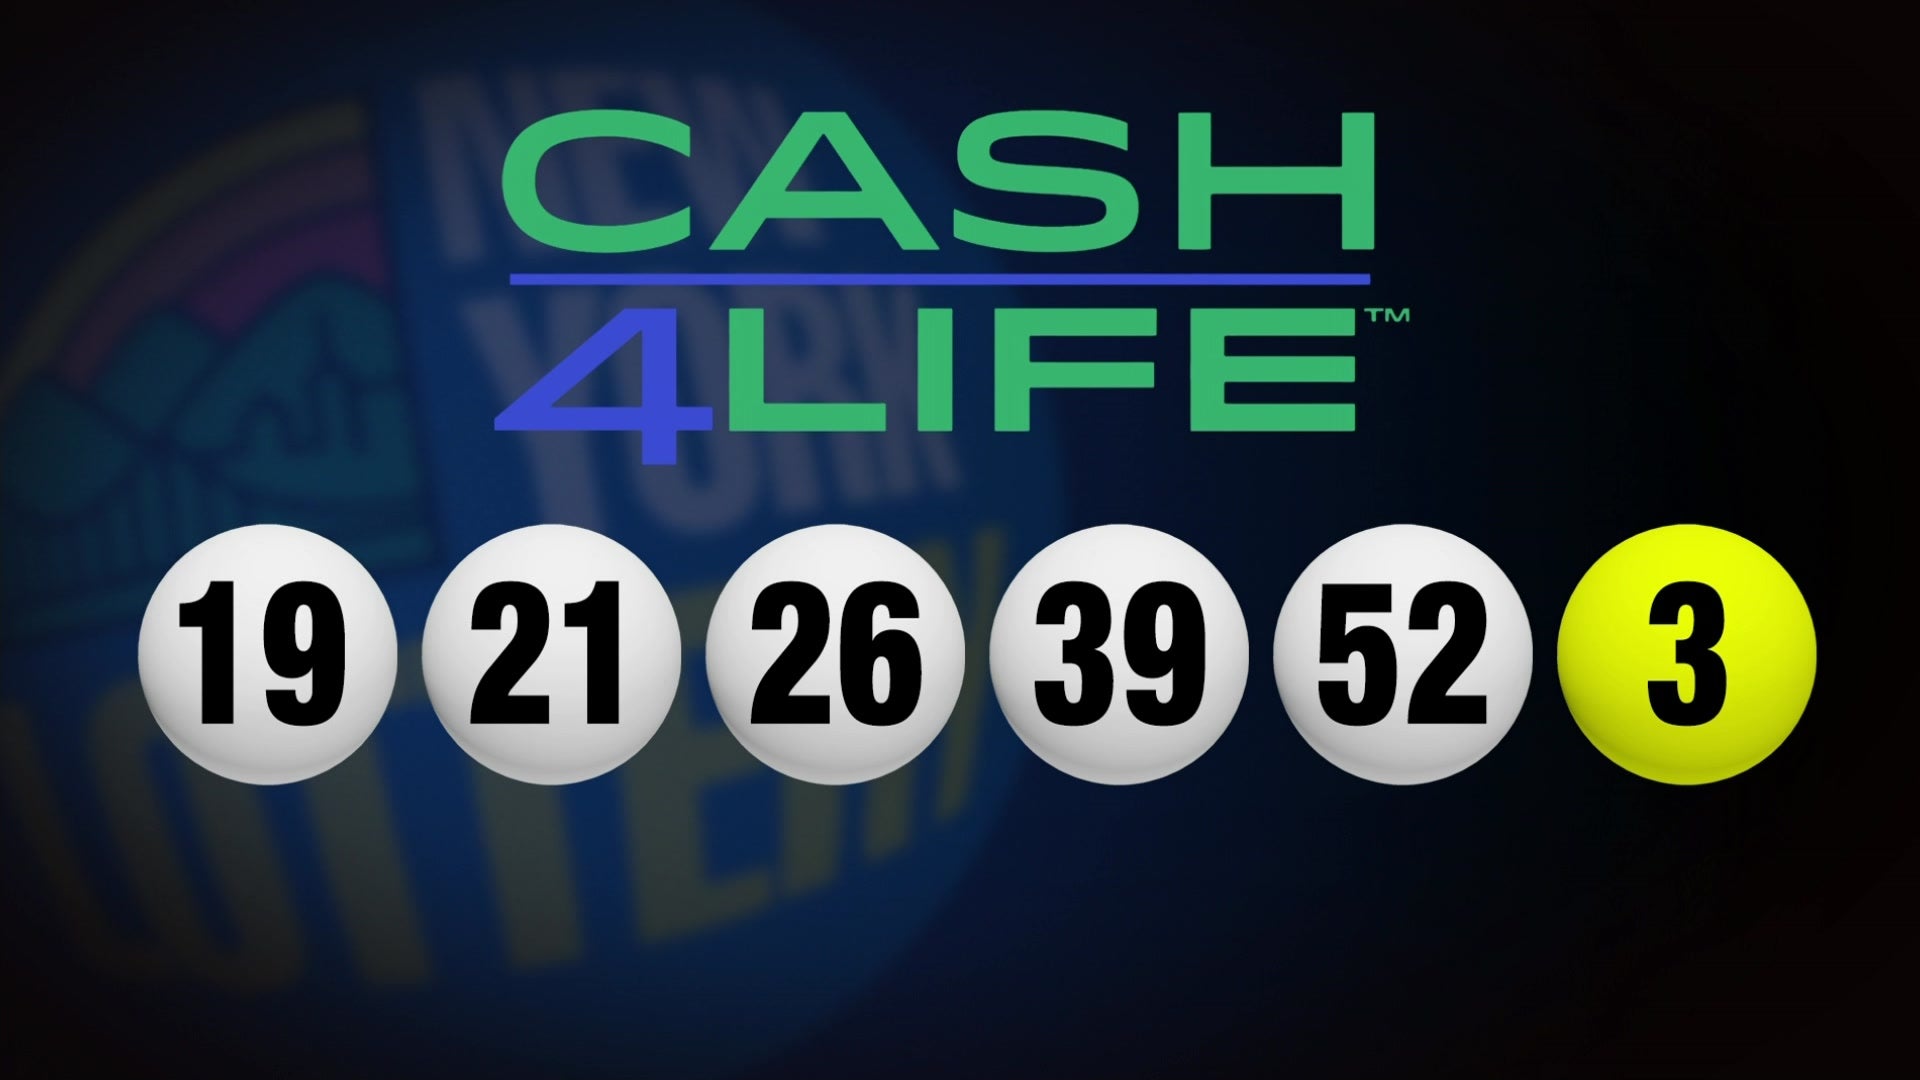 cash 4 life ga winning numbers